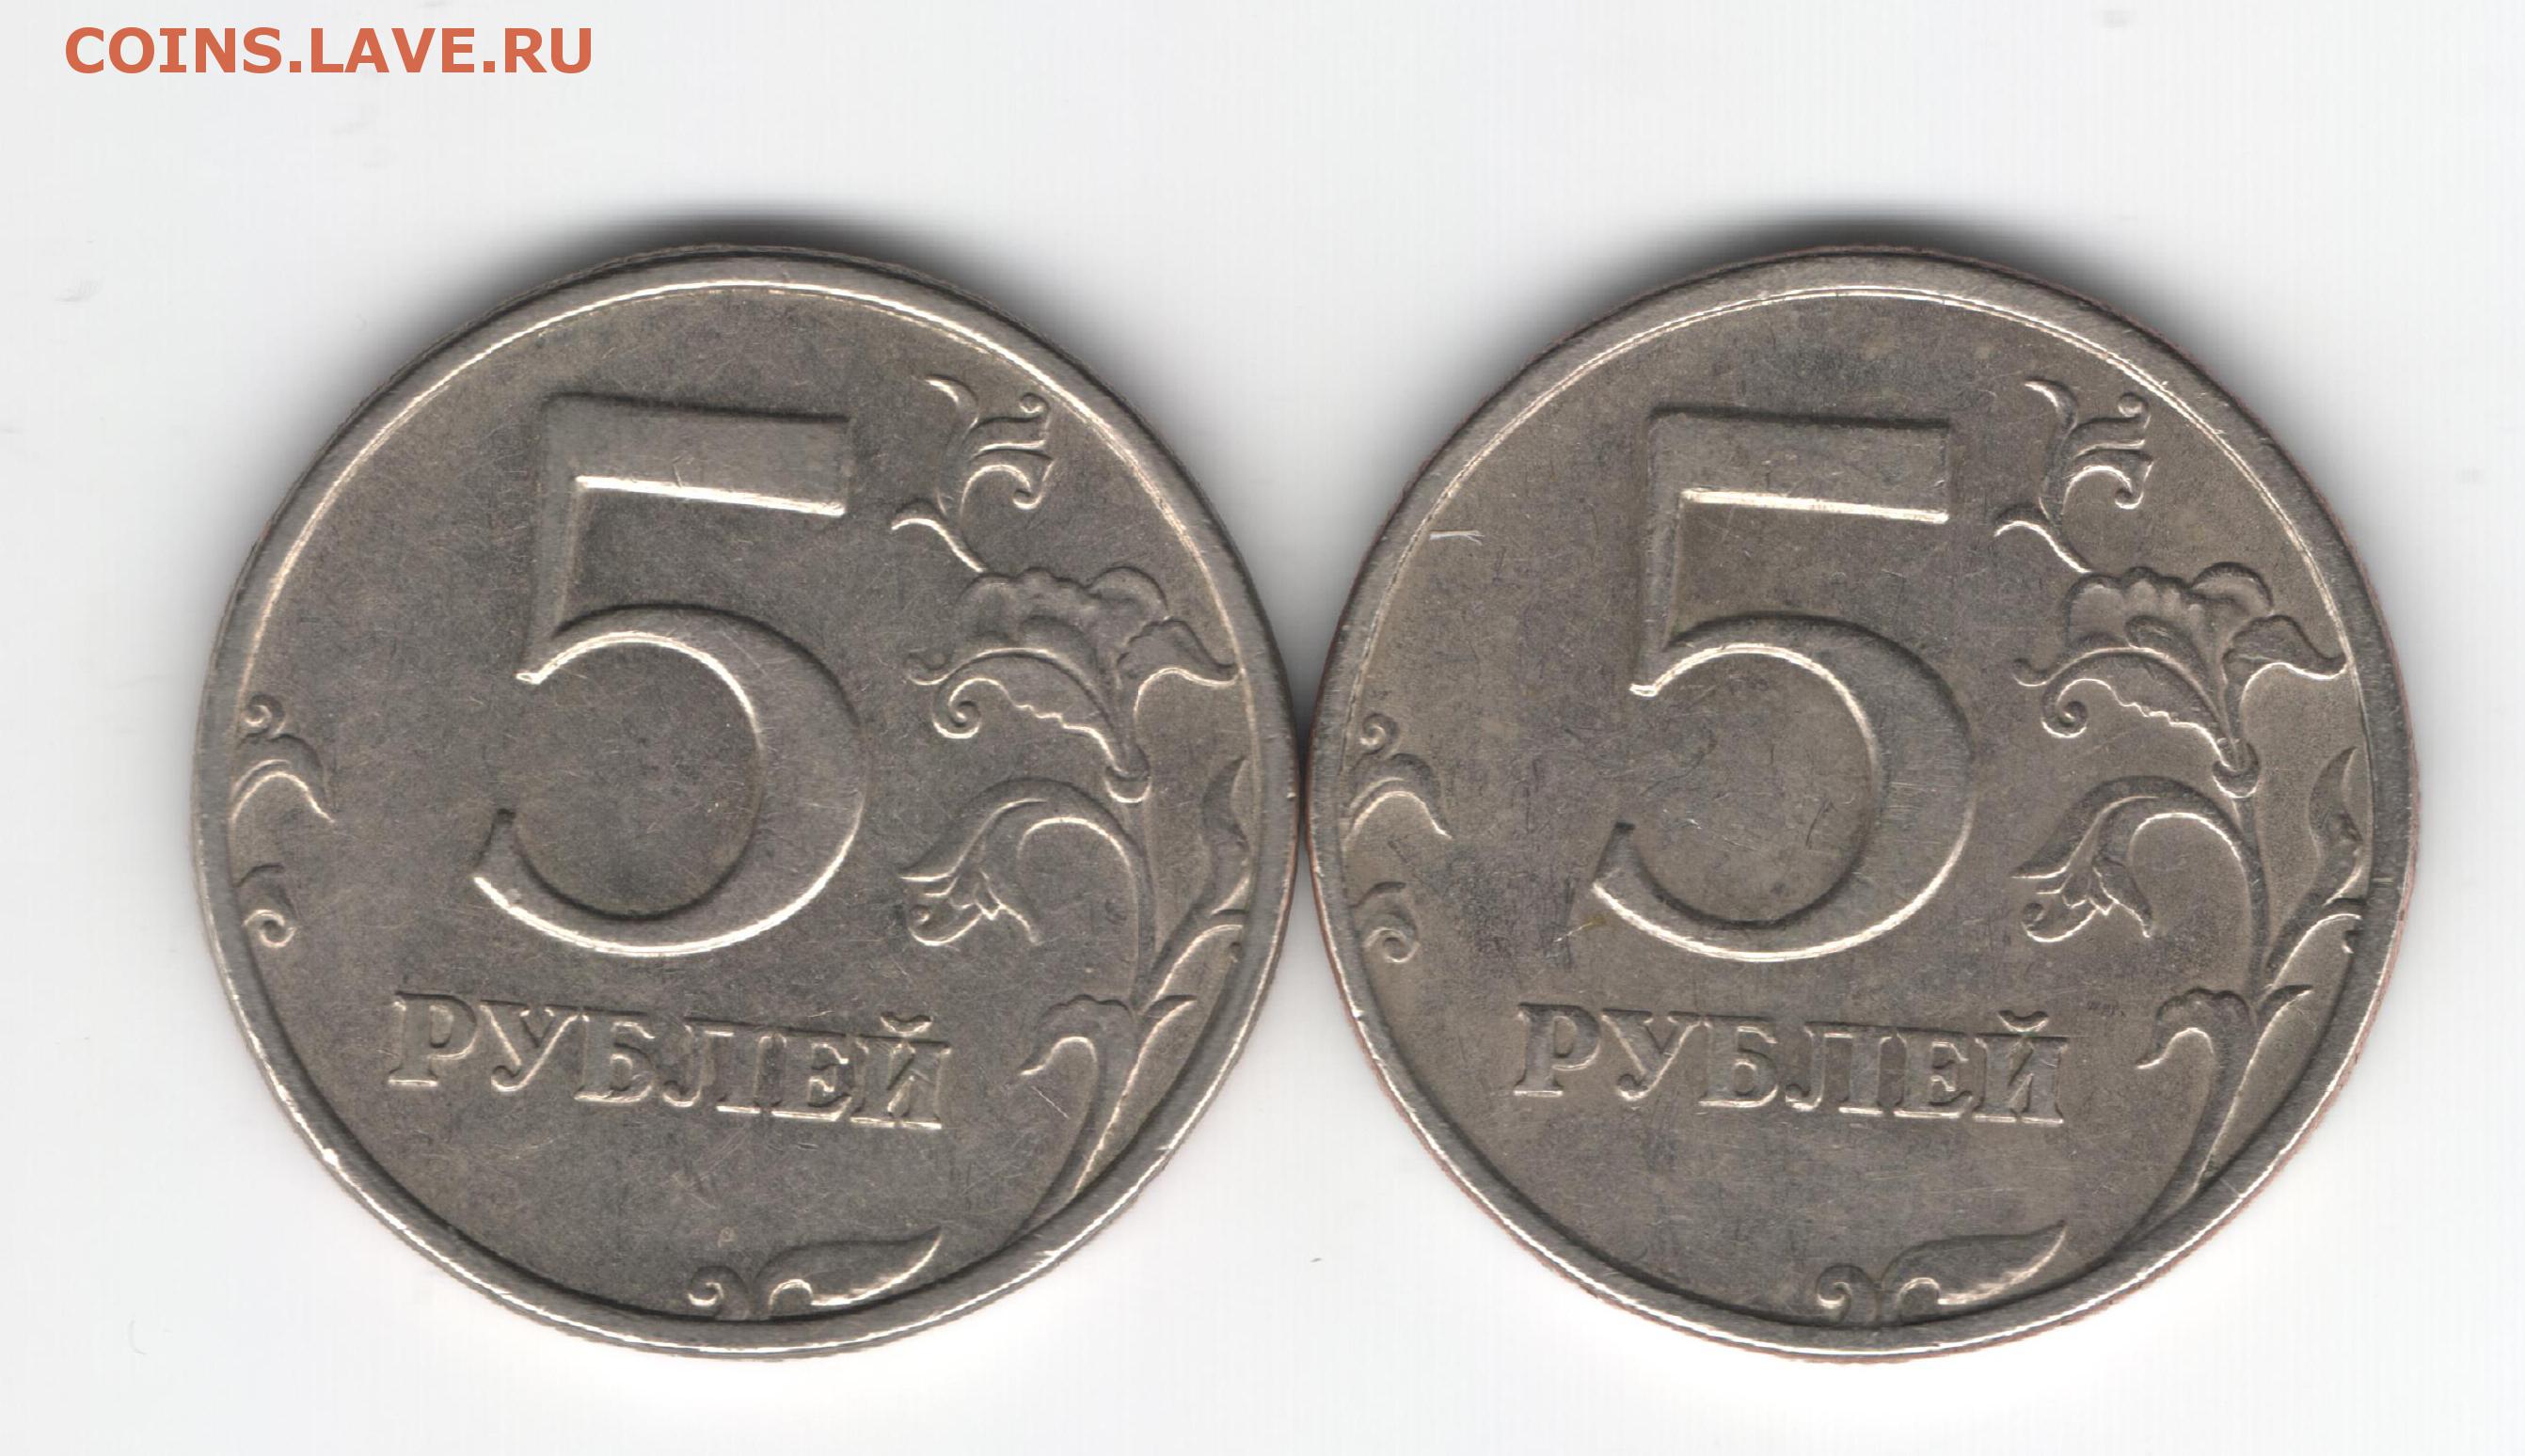 9 5 рубли. Нумизматика 5 рублей 1997. 5 Рублей 1997 ММД. 5 Рублей 1997 г., раздвоенный контур цифры номинала.